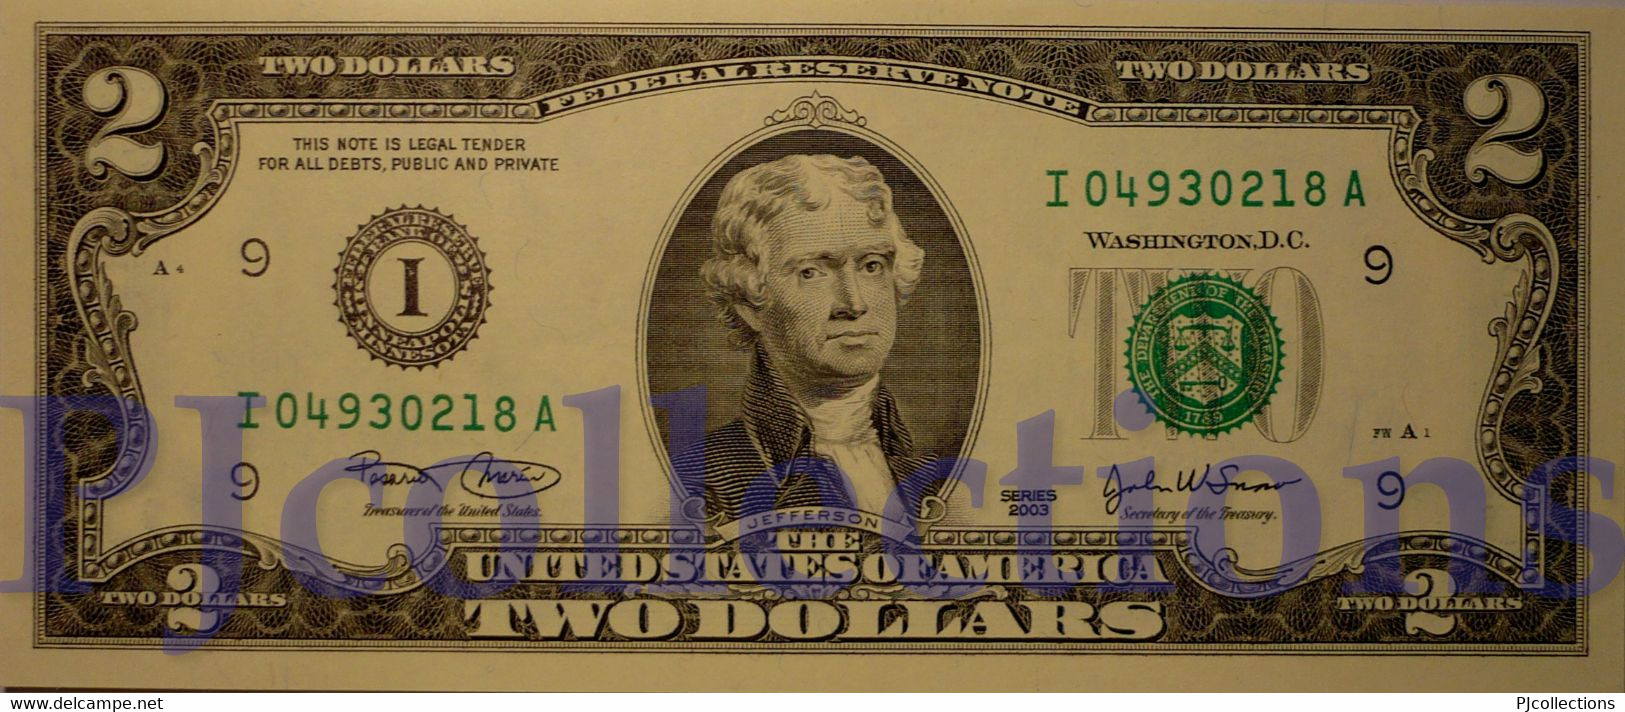 UNITED STATES OF AMERICA 2 DOLLARS 2003 PICK 516a PREFIX "I" UNC - Federal Reserve (1928-...)